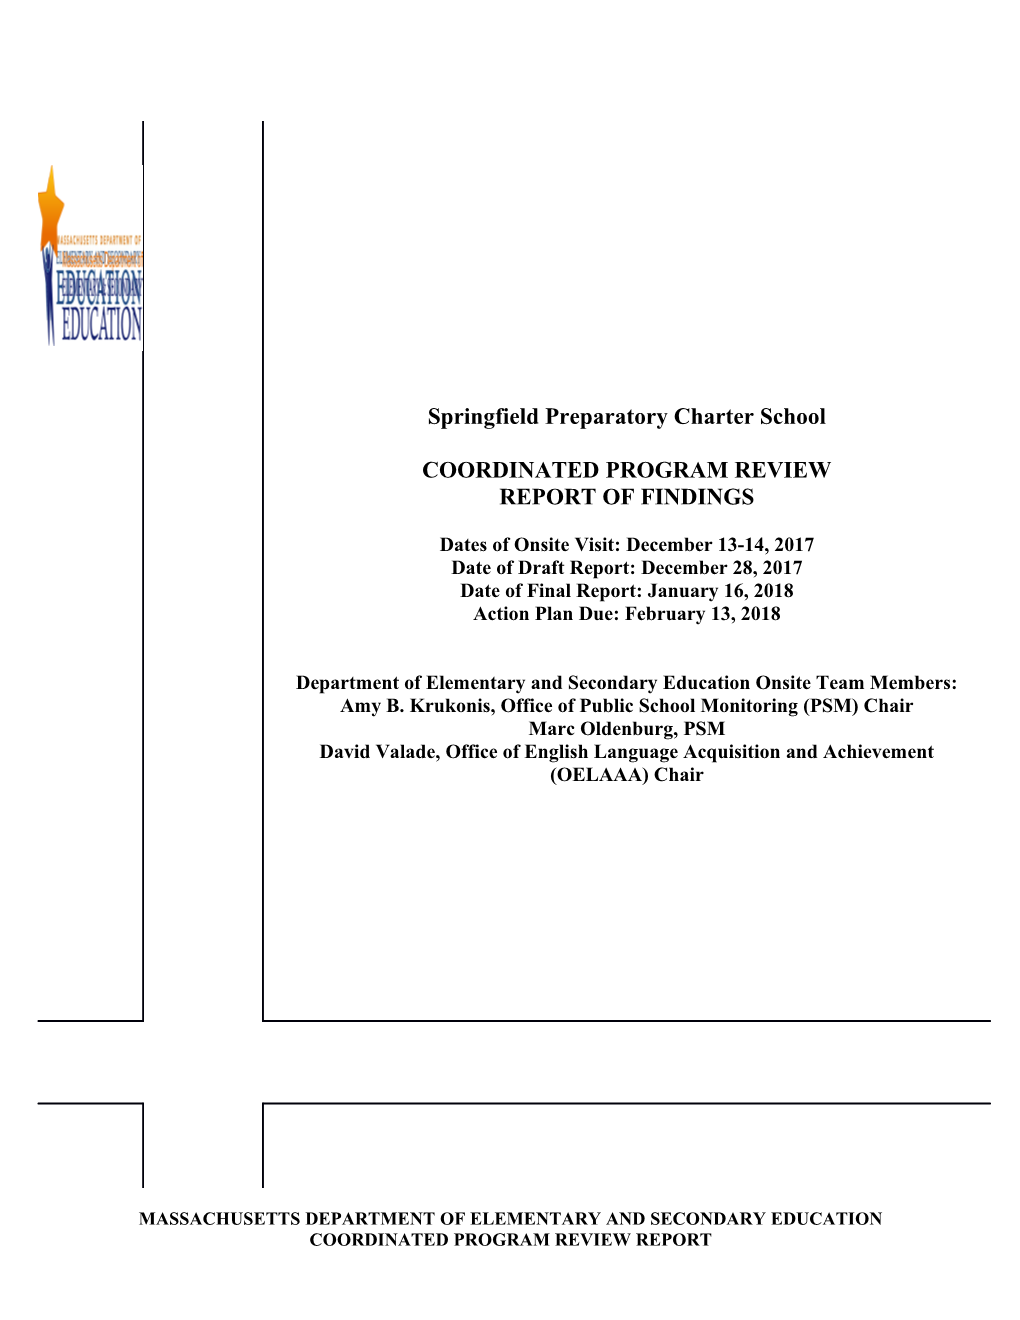 Springfield Preparatory Charter School CPR Final Report 2018